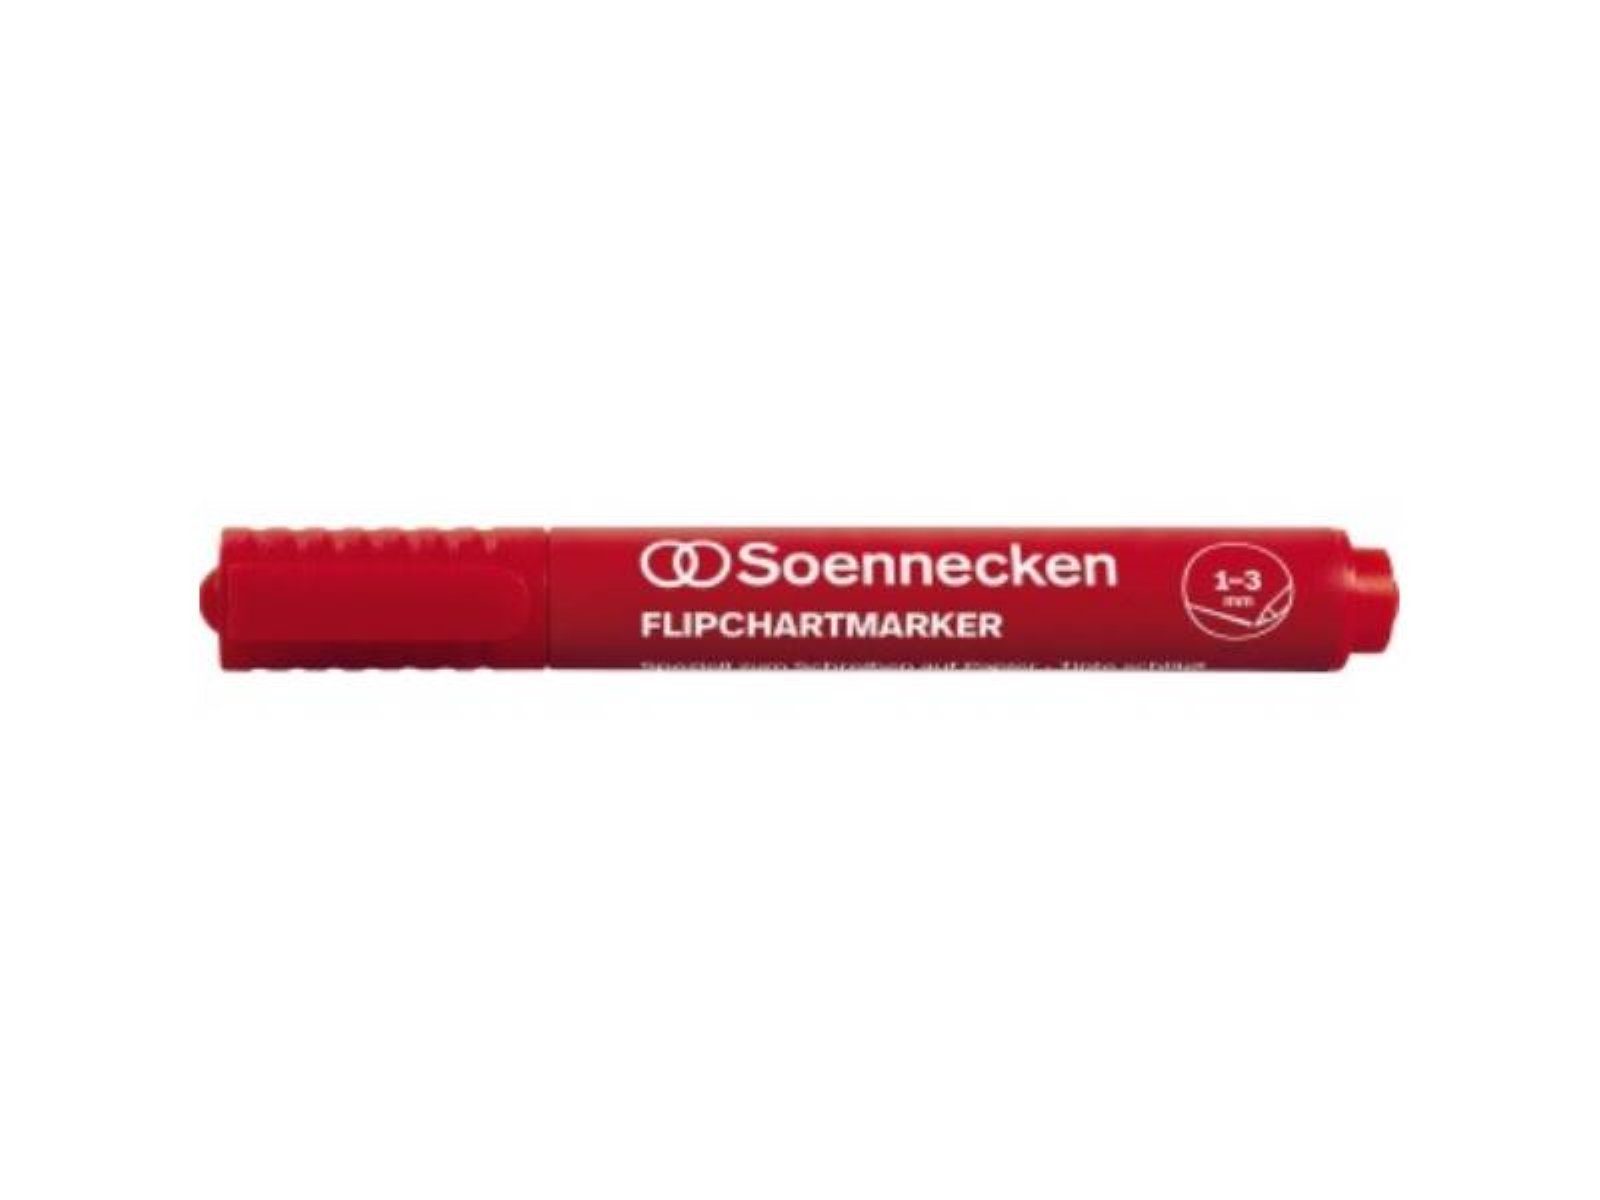 Soennecken Fli Marker Soennecken SOENNECKEN 1-3mm 3075 rot Flipchartmarker Soennecken